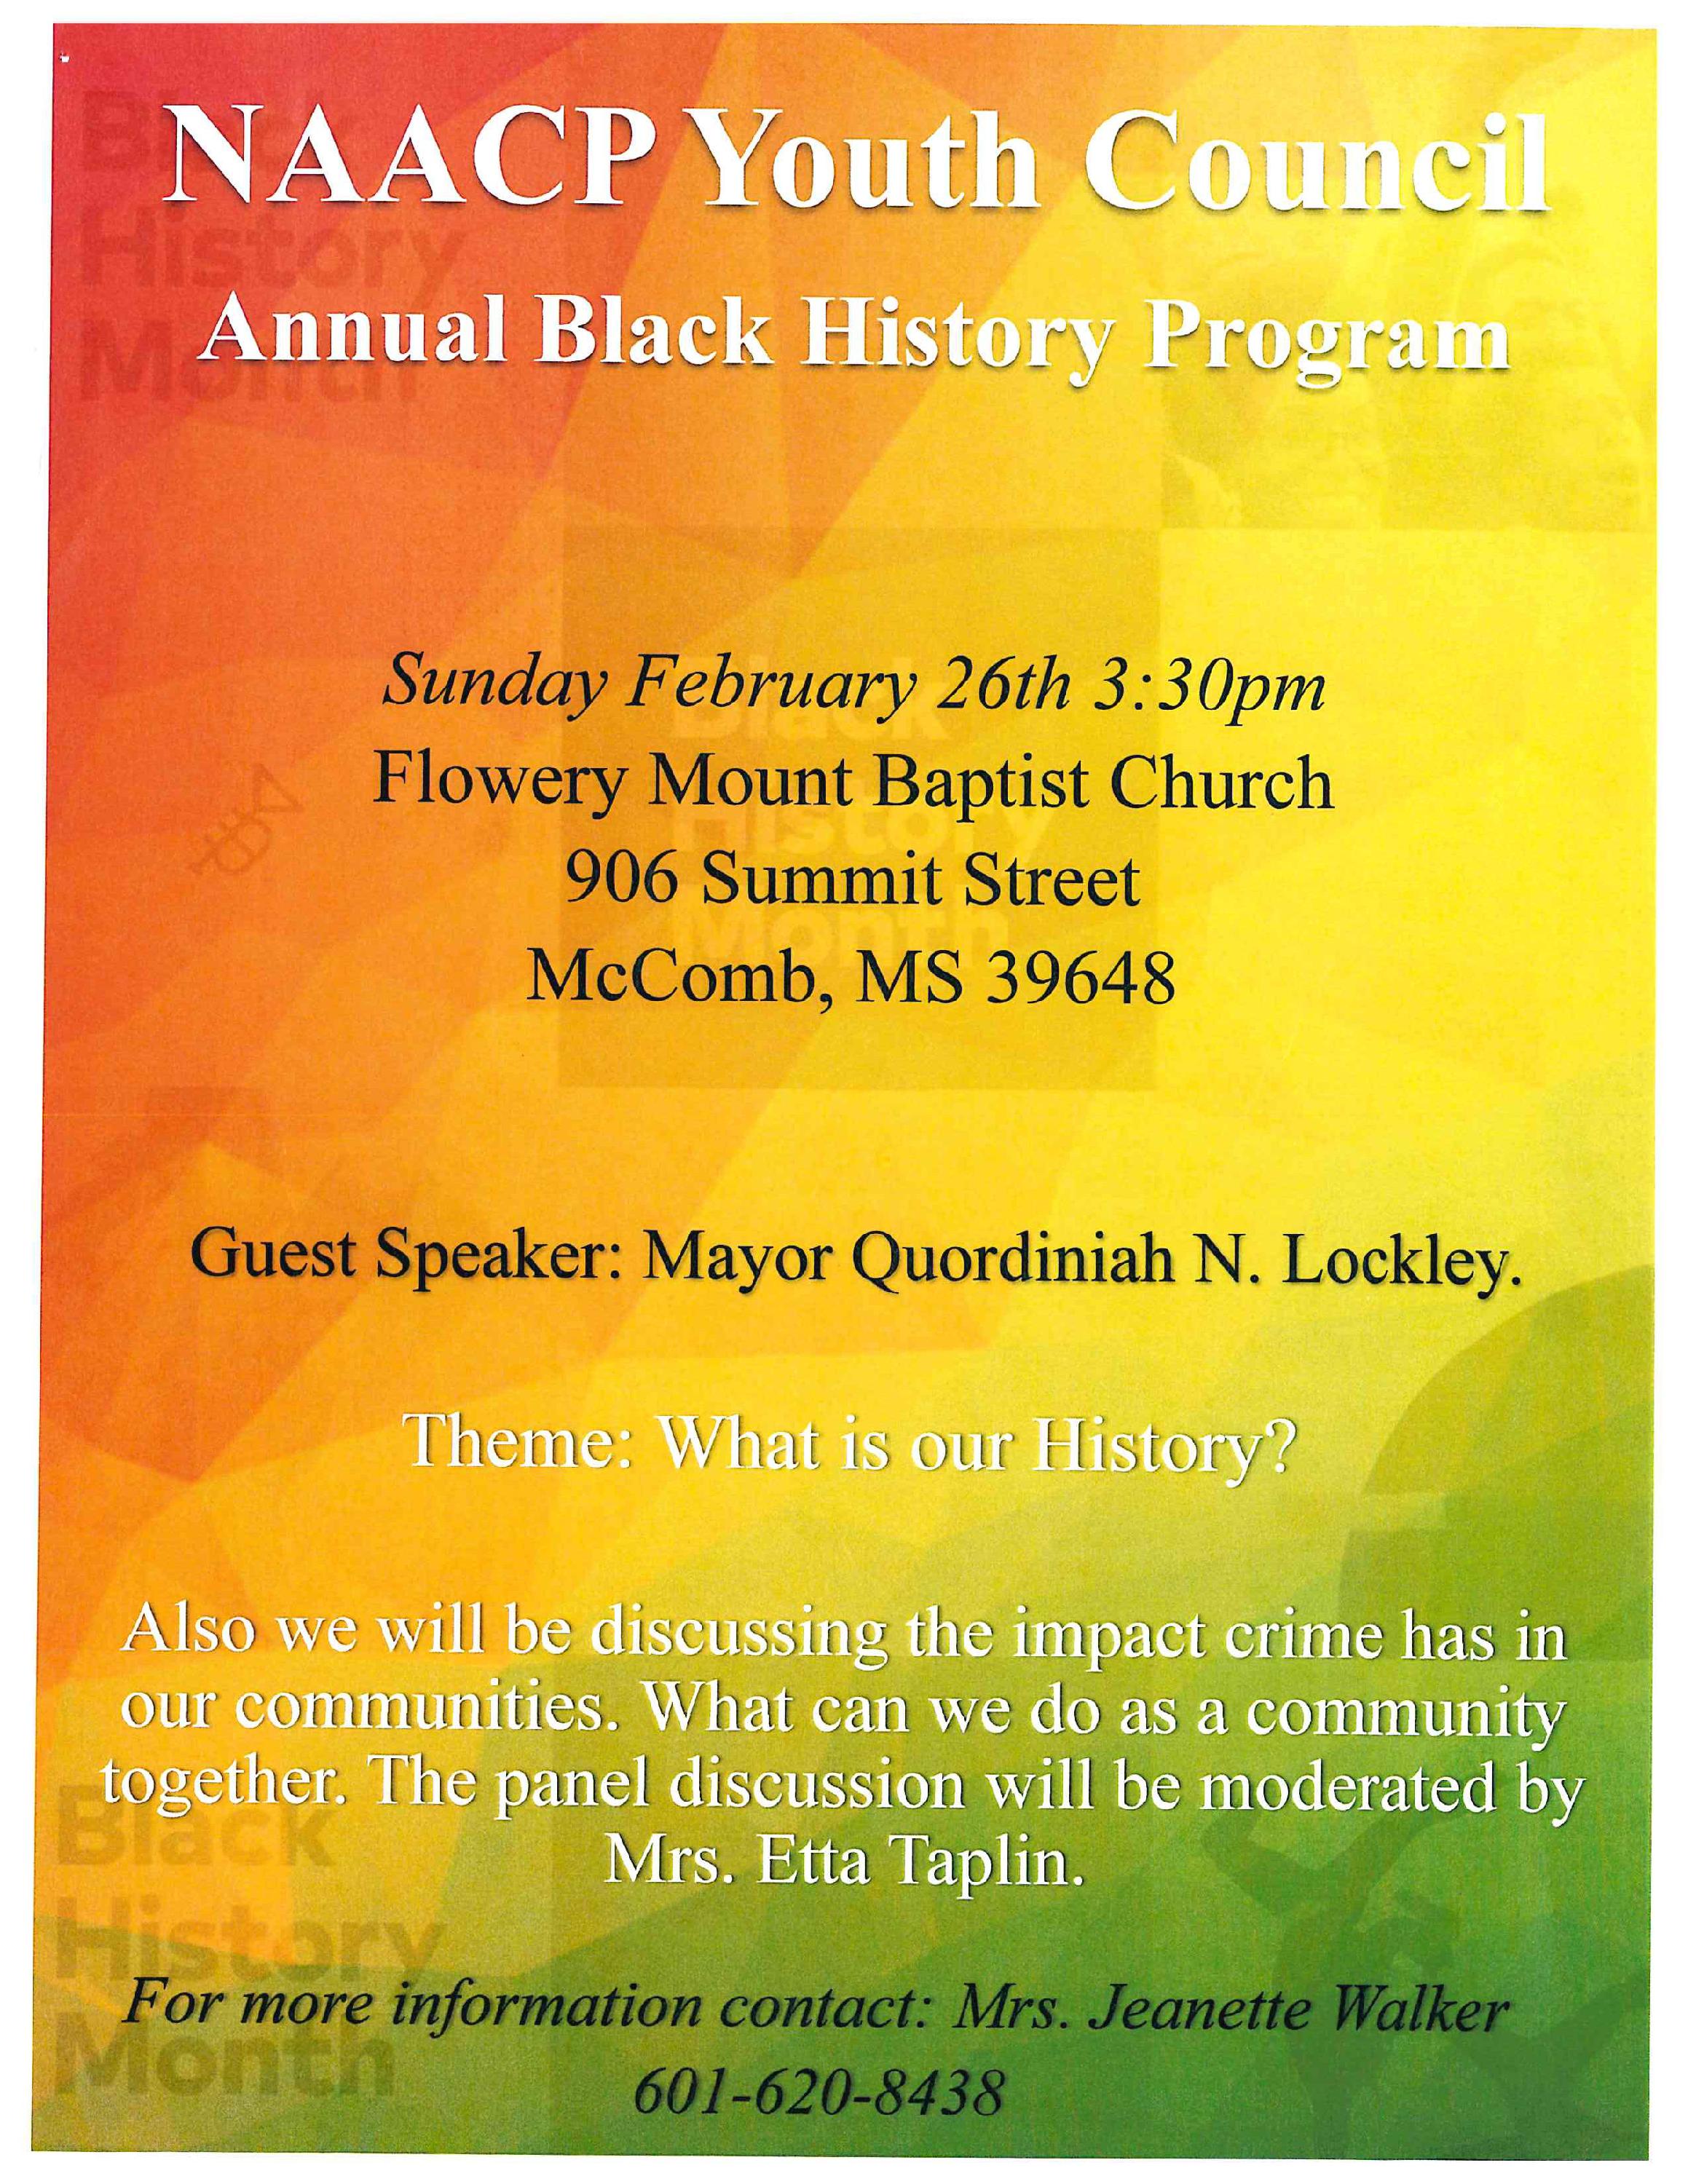 NAACP YOUTH COUNCIL BLACK HISTORY PROGRAM